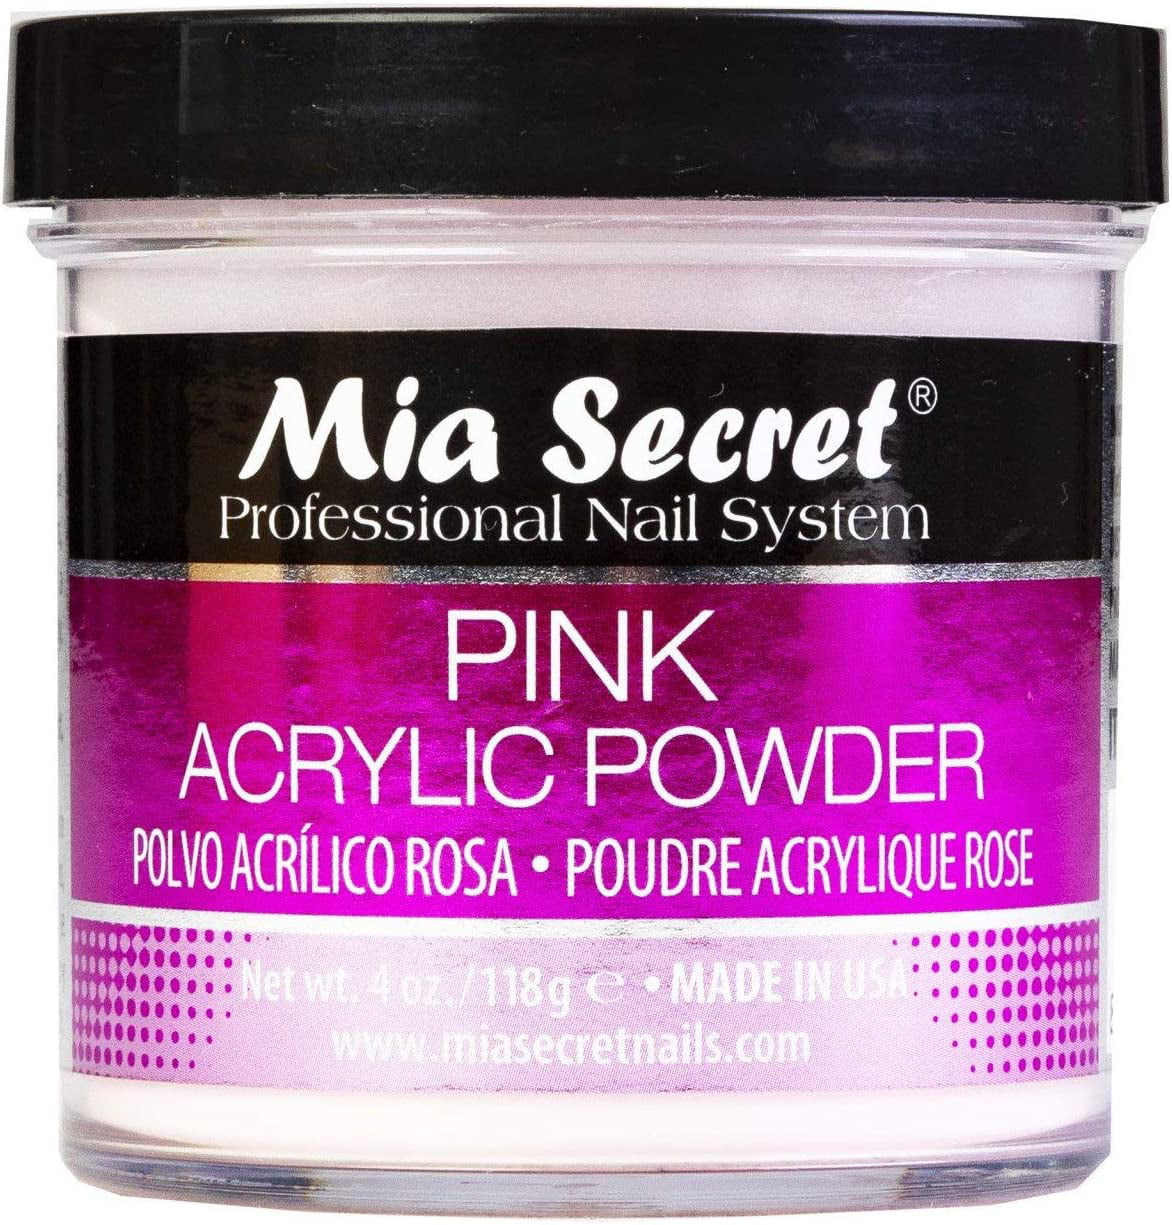 Mia Secret Pink Acrylic Powder 4 oz. - Walmart.com ...